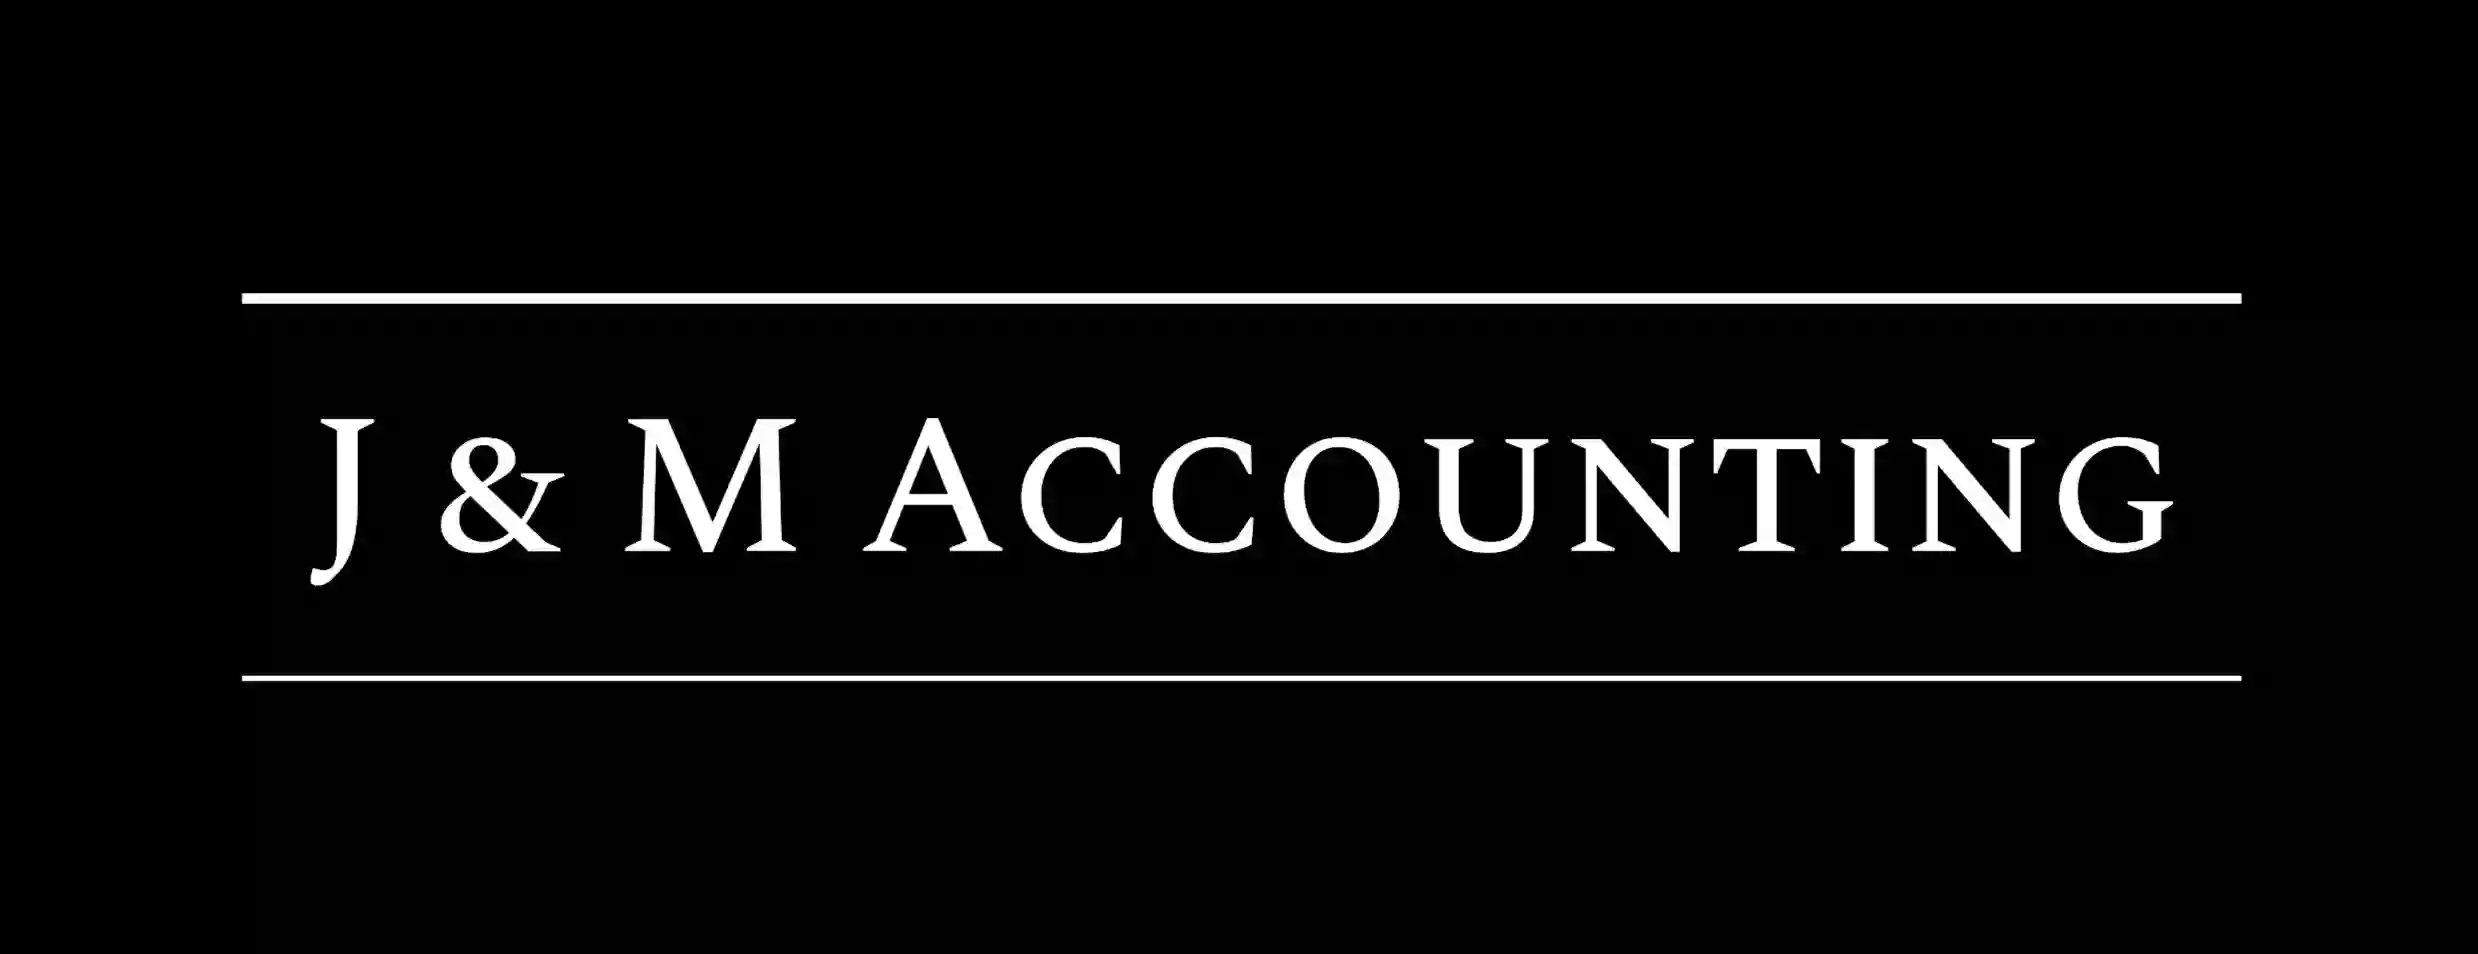 J & M Accounting